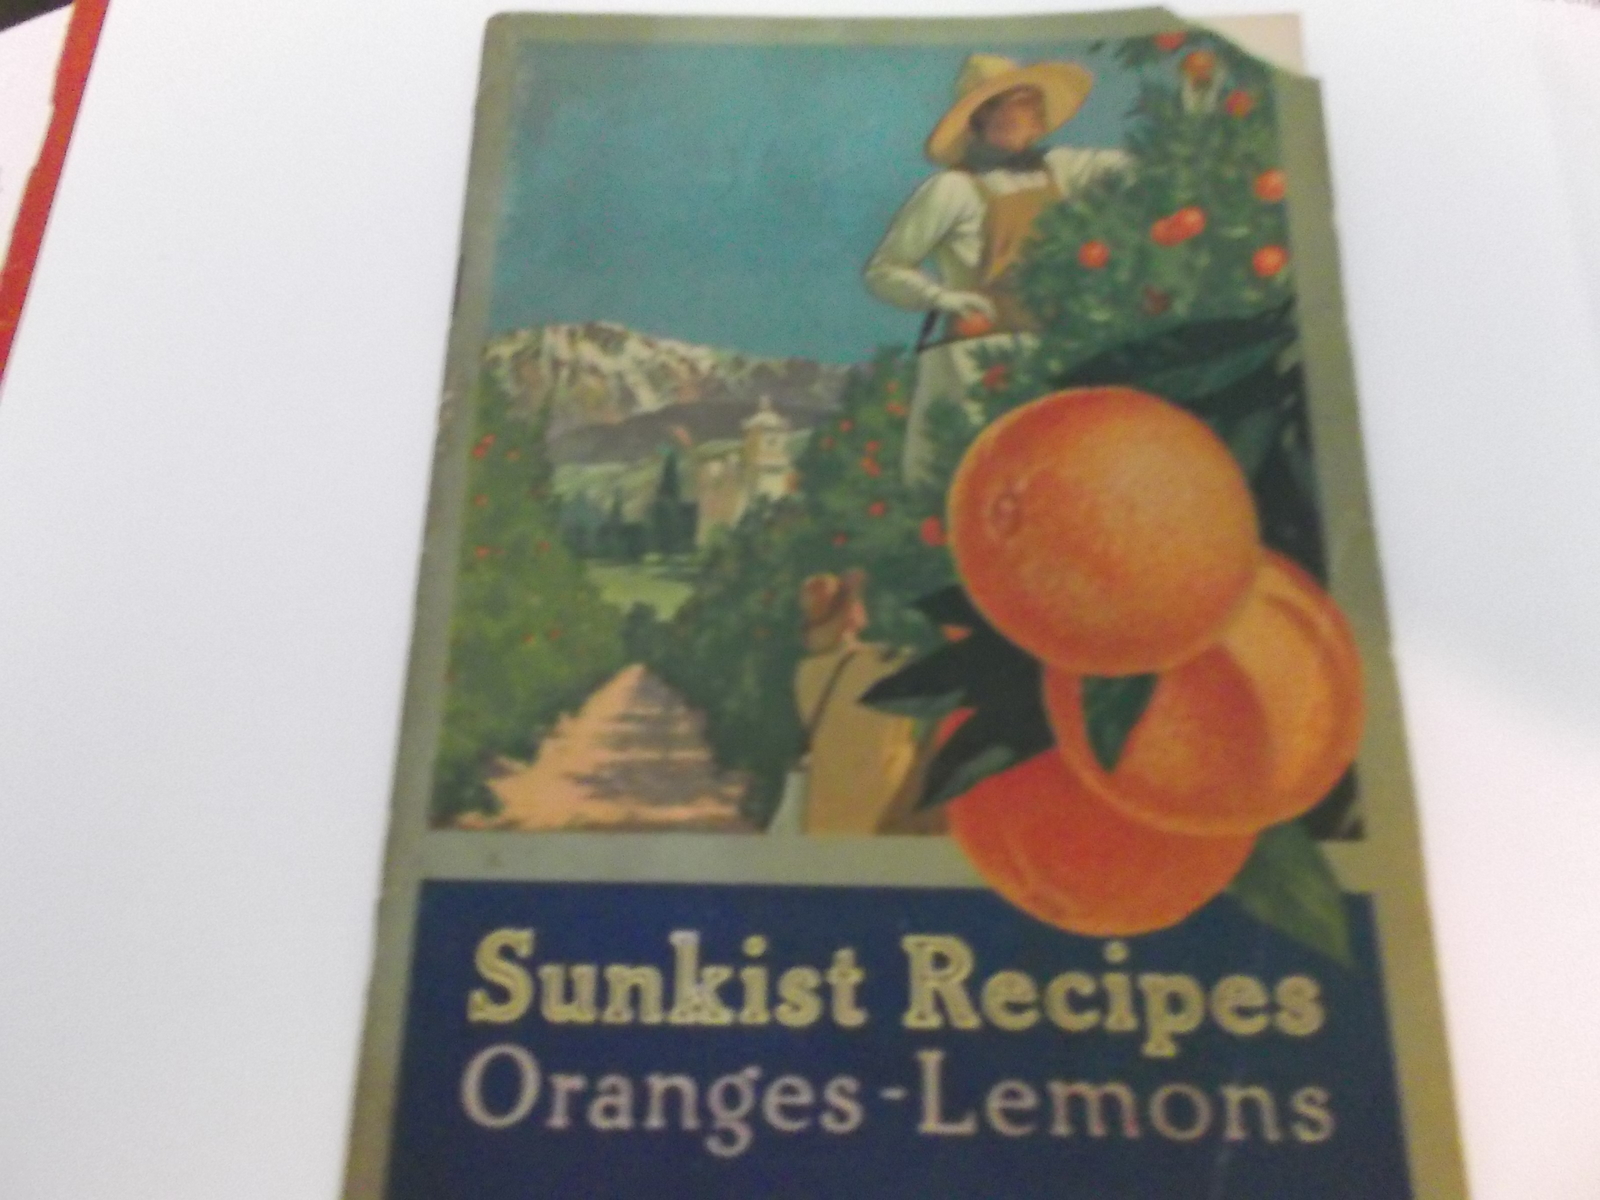 Sunkist 1916 Recipe book Oranges-Lemons - $10.00